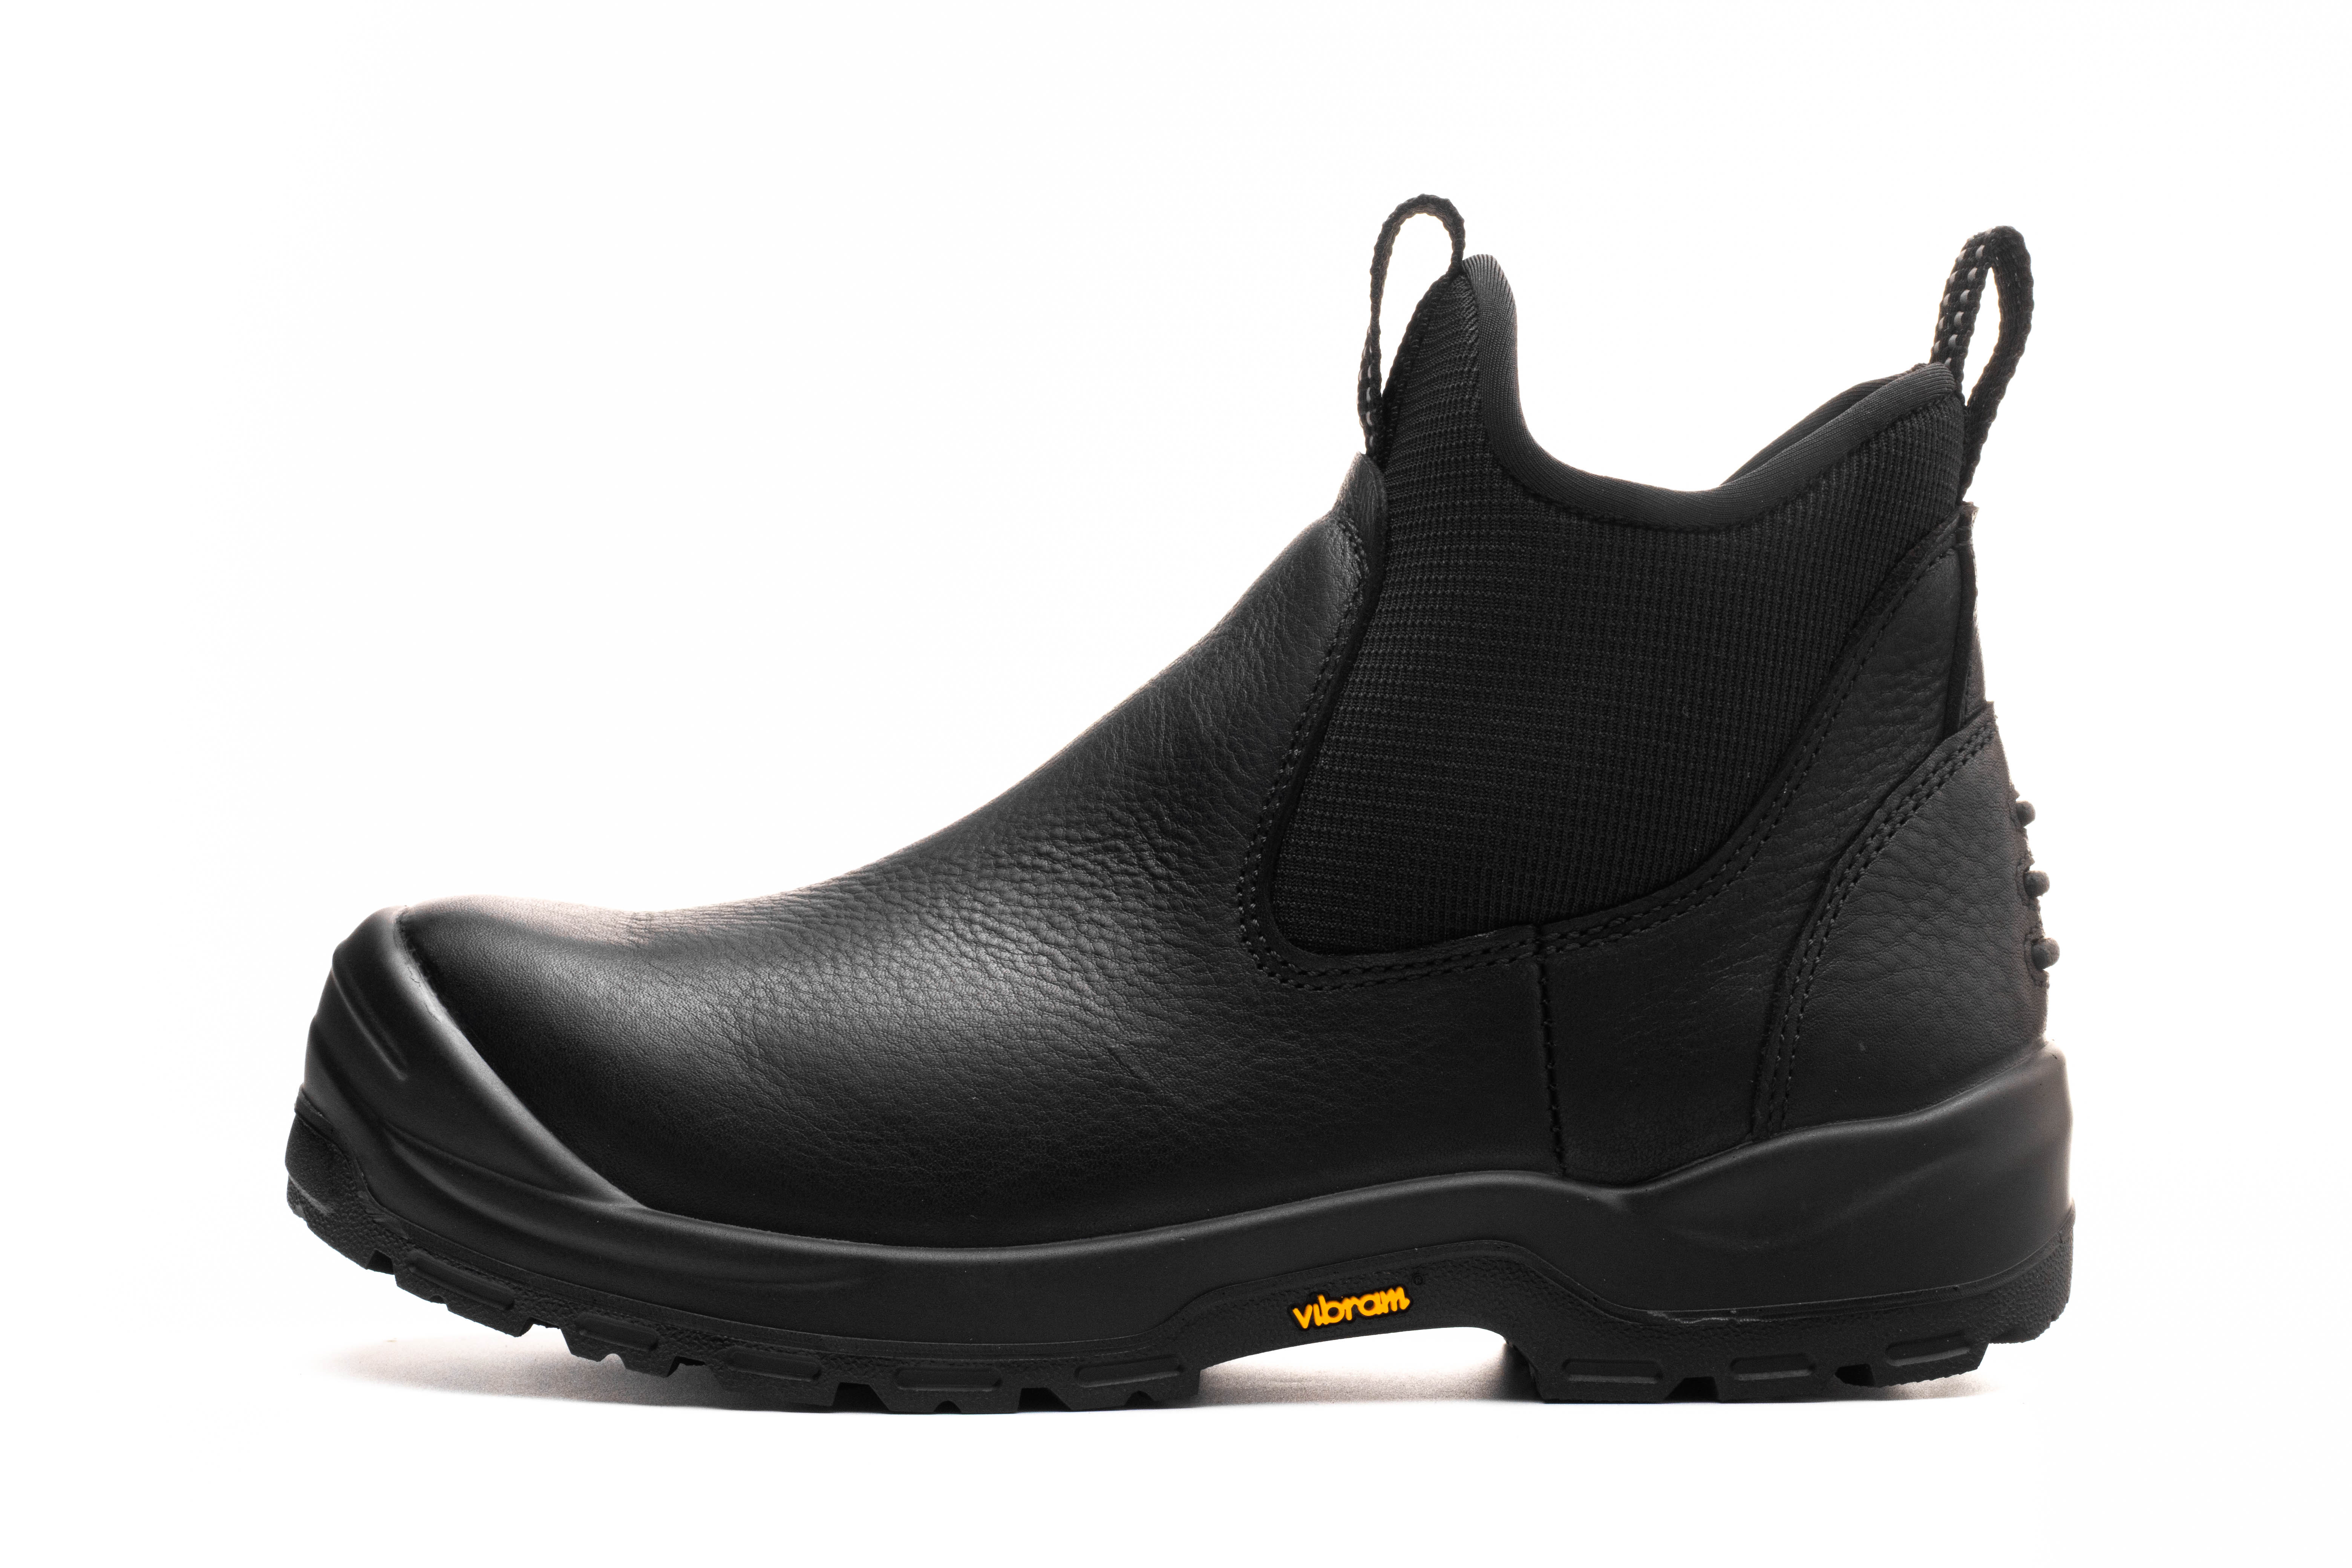 6IN. Black Composite Toe Waterproof Slip On Chelsea Work Boots  vibram sole